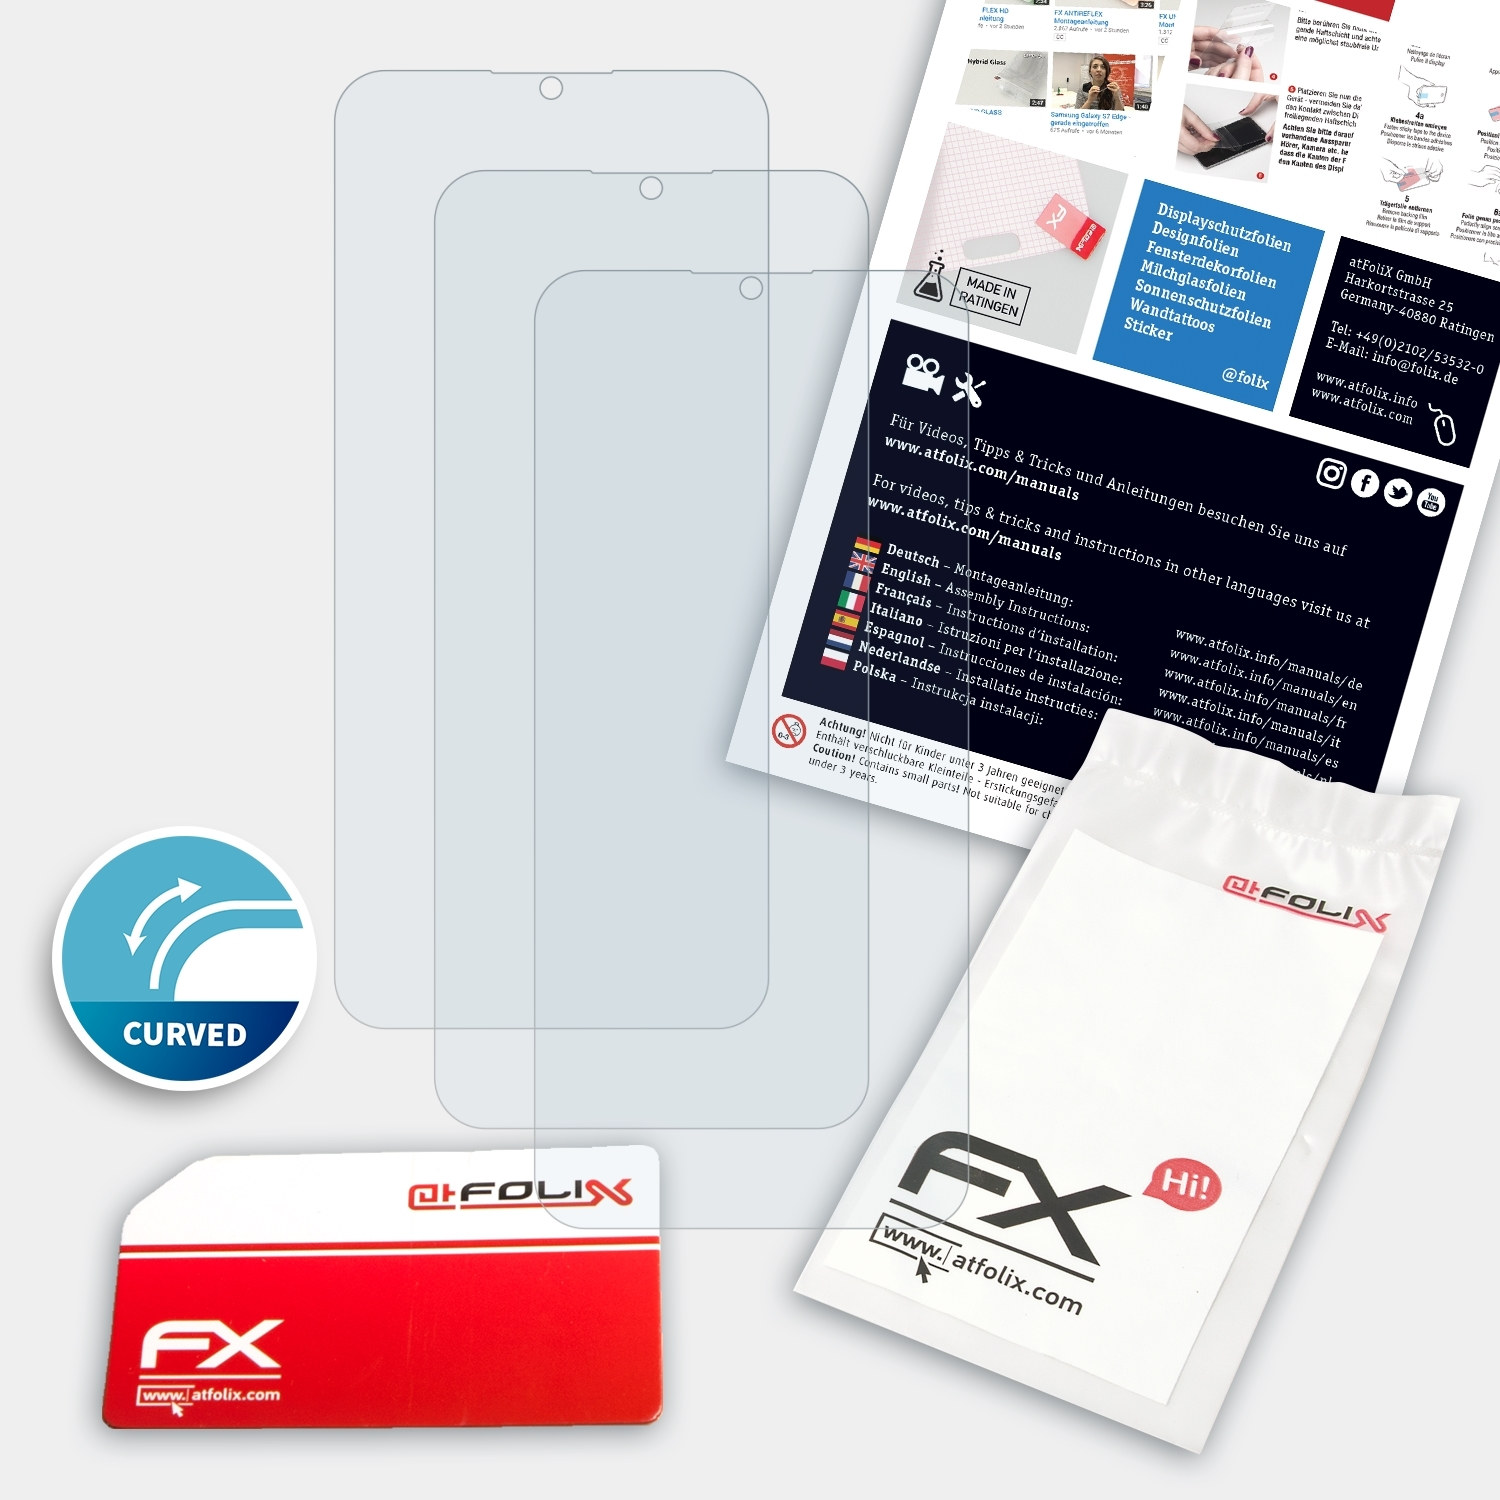 FX-ActiFleX 3x Displayschutz(für ATFOLIX Realme C21Y)